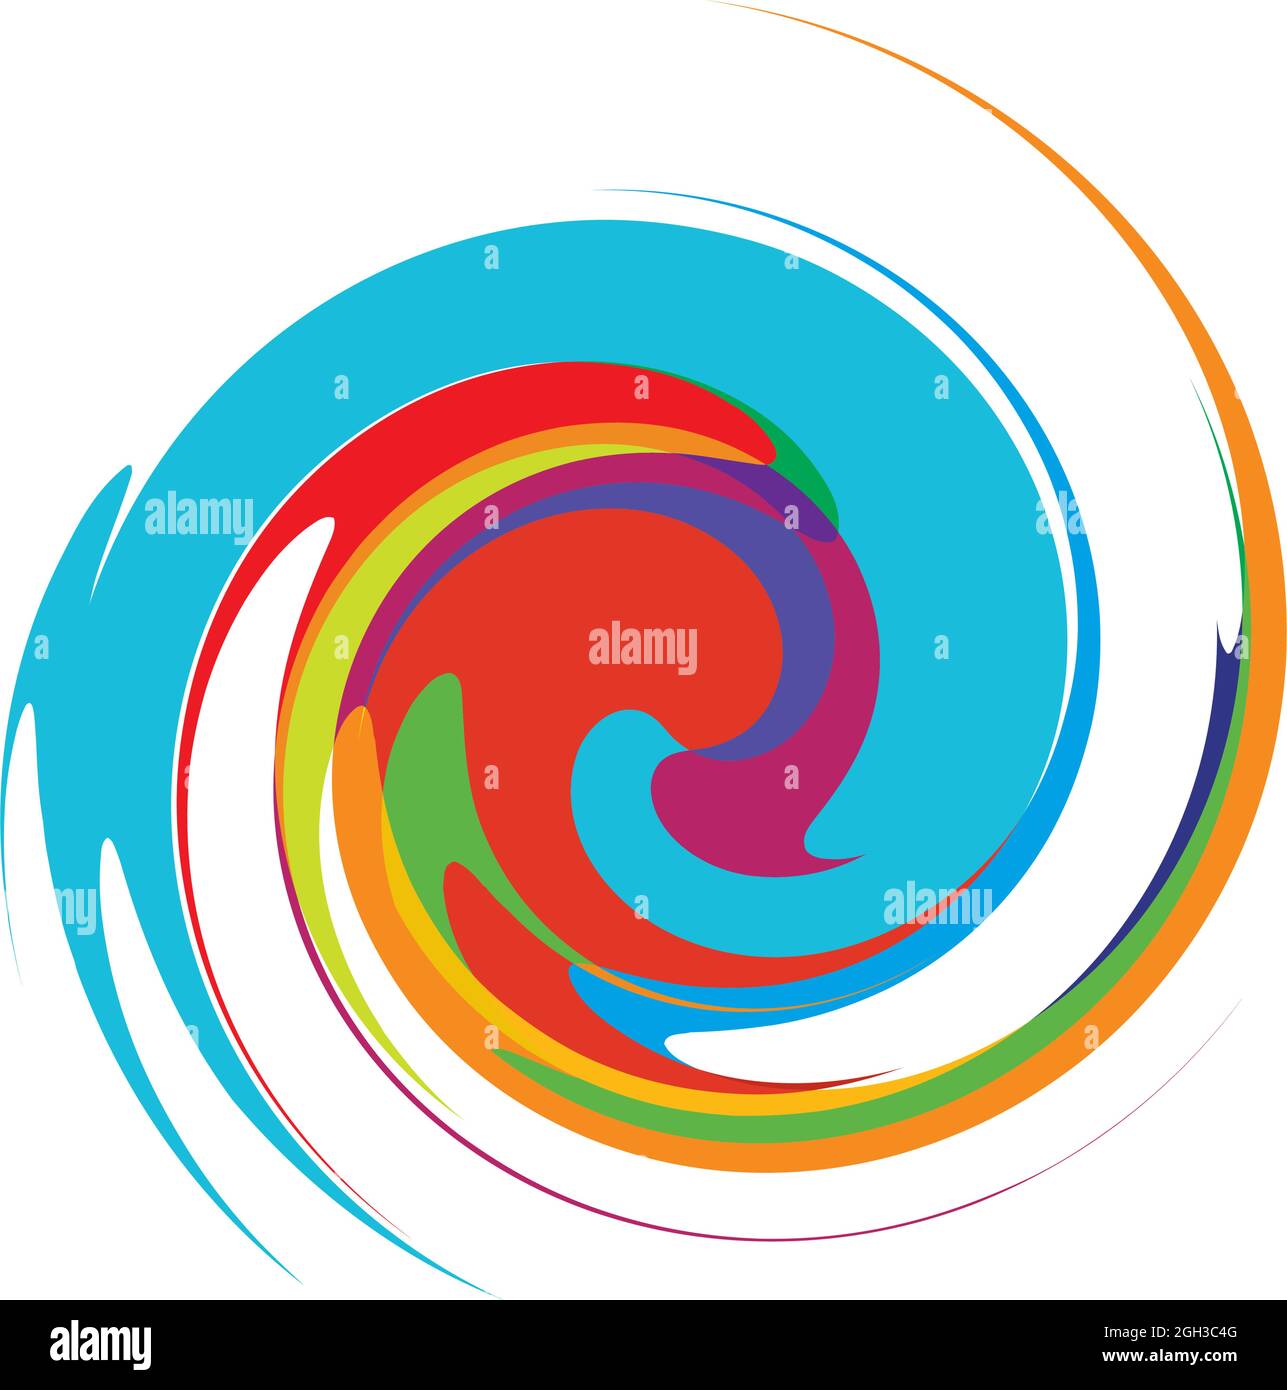 Wellen, Spiralen, Wirbeln, Spiralen. Helix Circular Twirl –  Stock-Vektor-Illustration, Clip-Art-Grafiken Stock-Vektorgrafik - Alamy